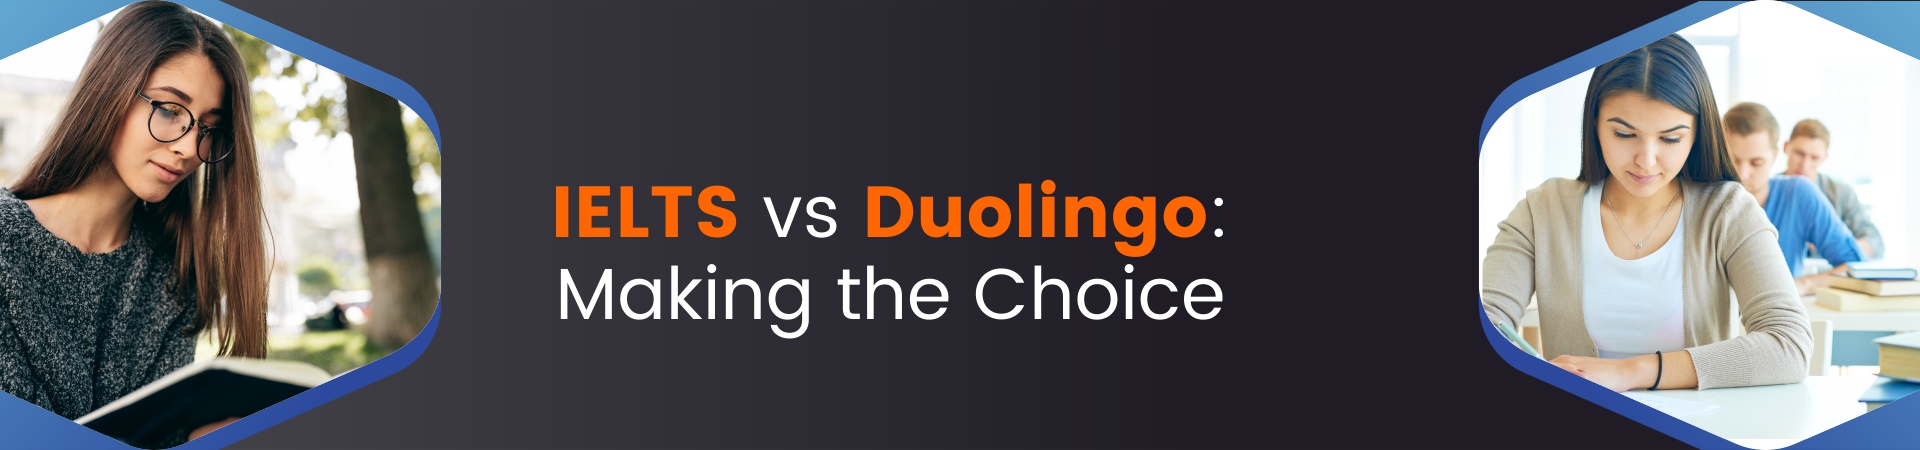 IELTS vs Duolingo: Making the Choice